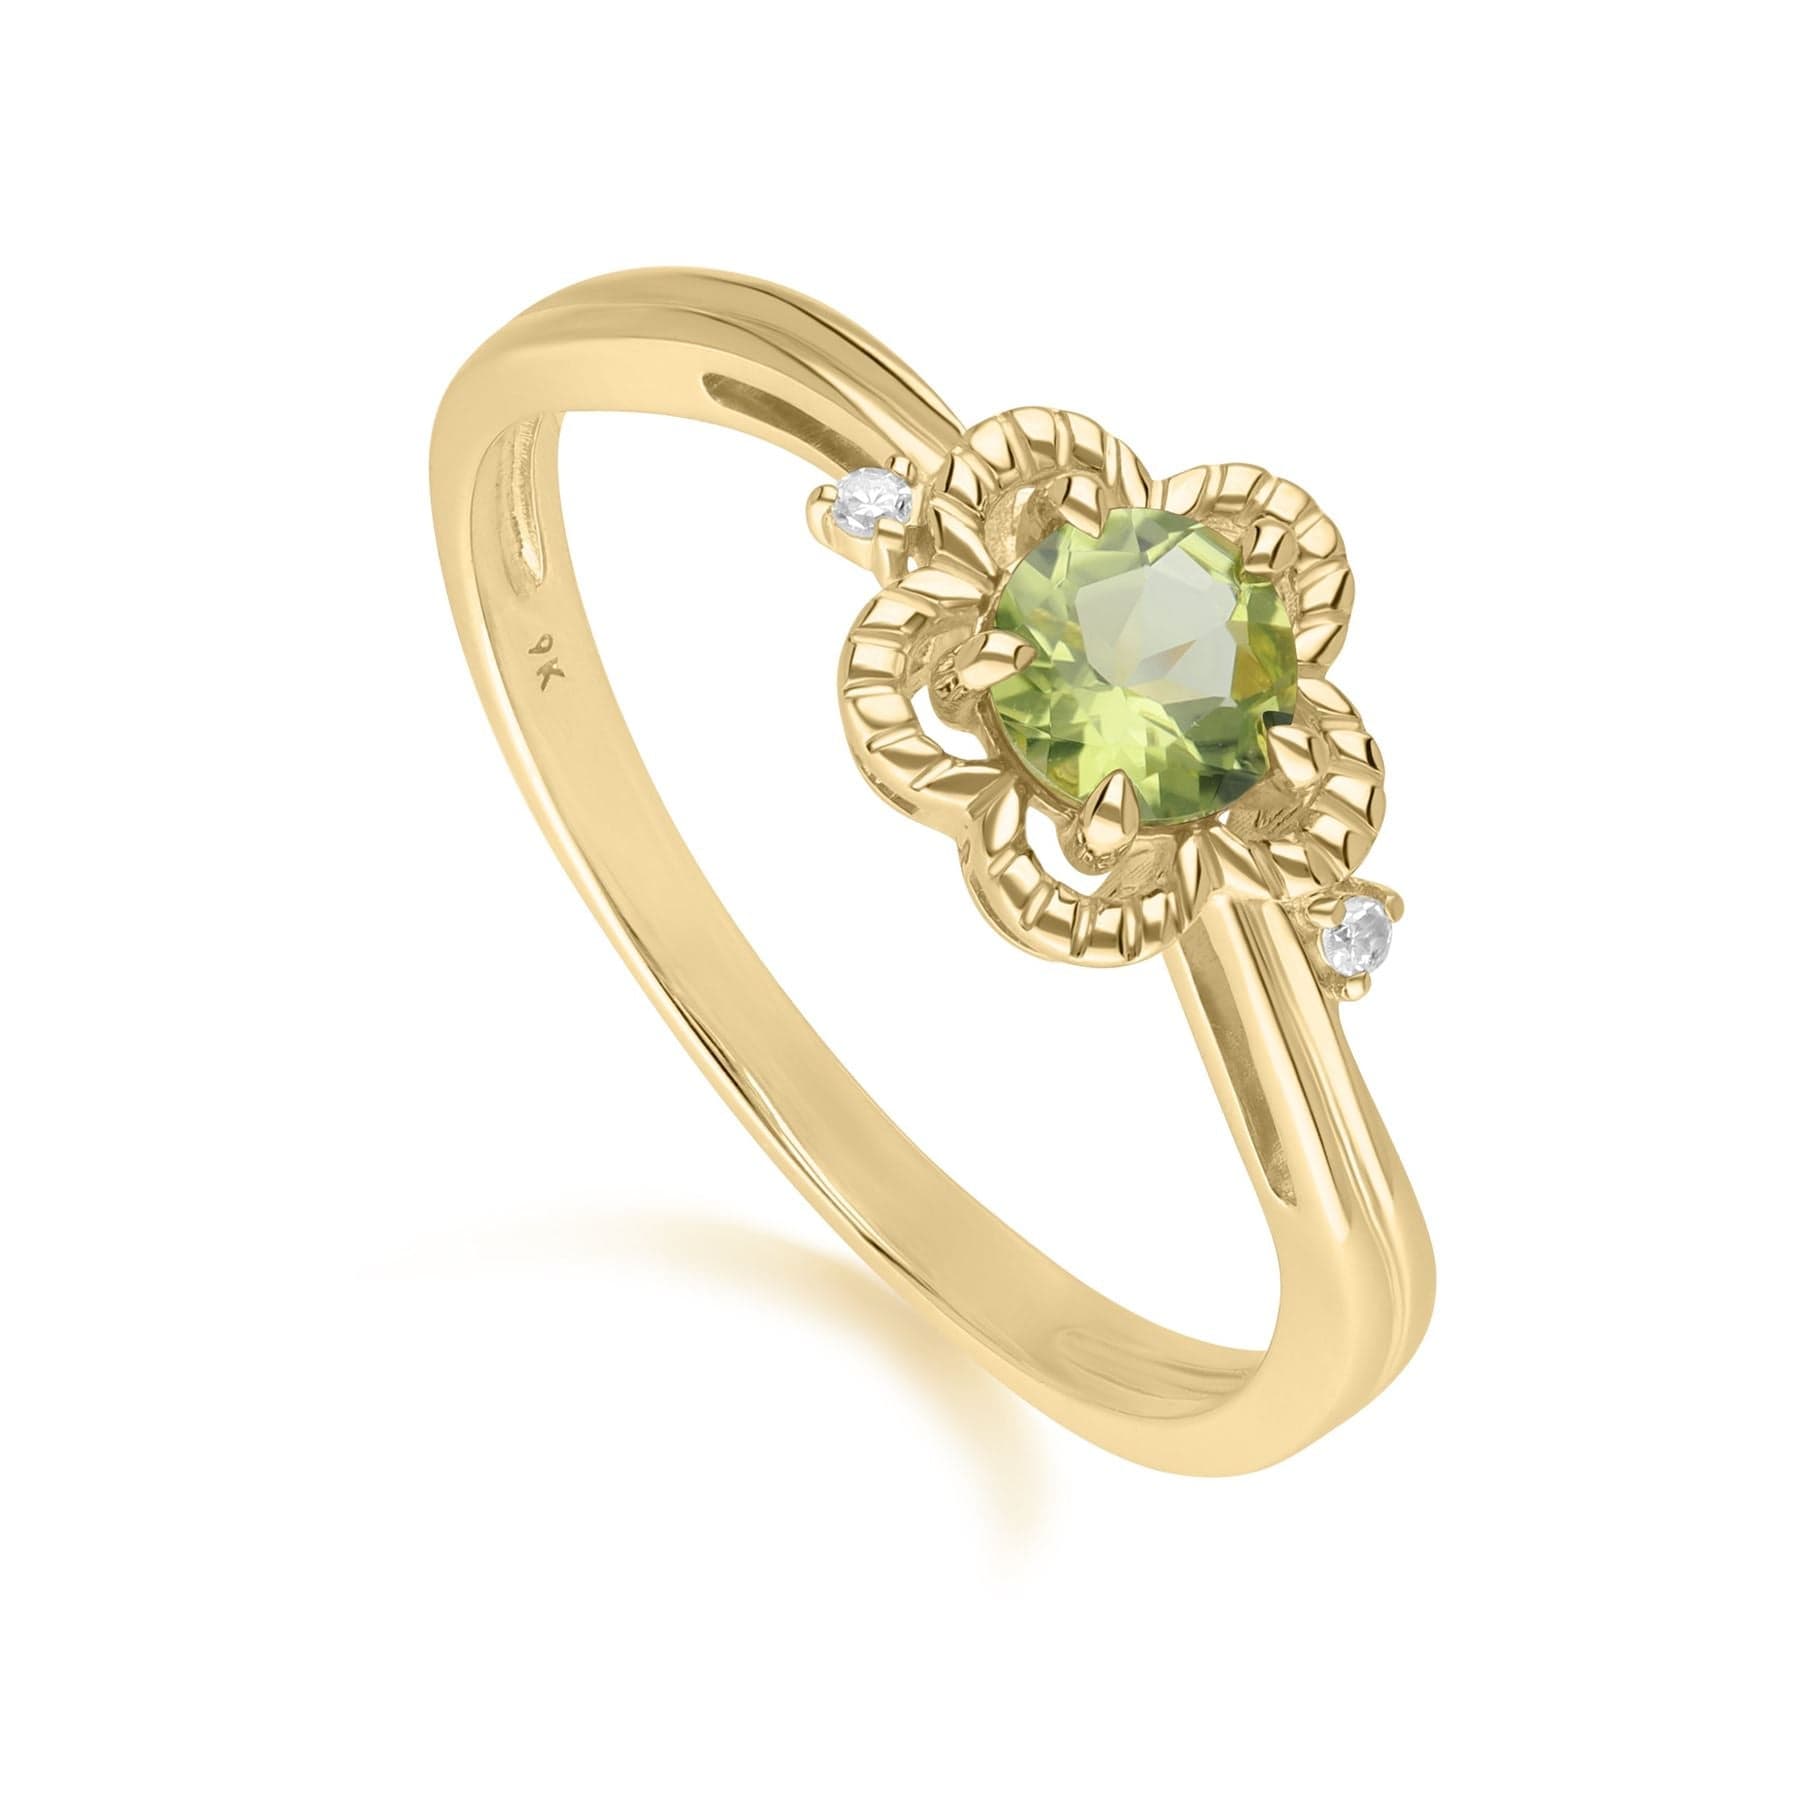 Floral Round Peridot & Diamond Ring in 9ct Yellow Gold - Gemondo